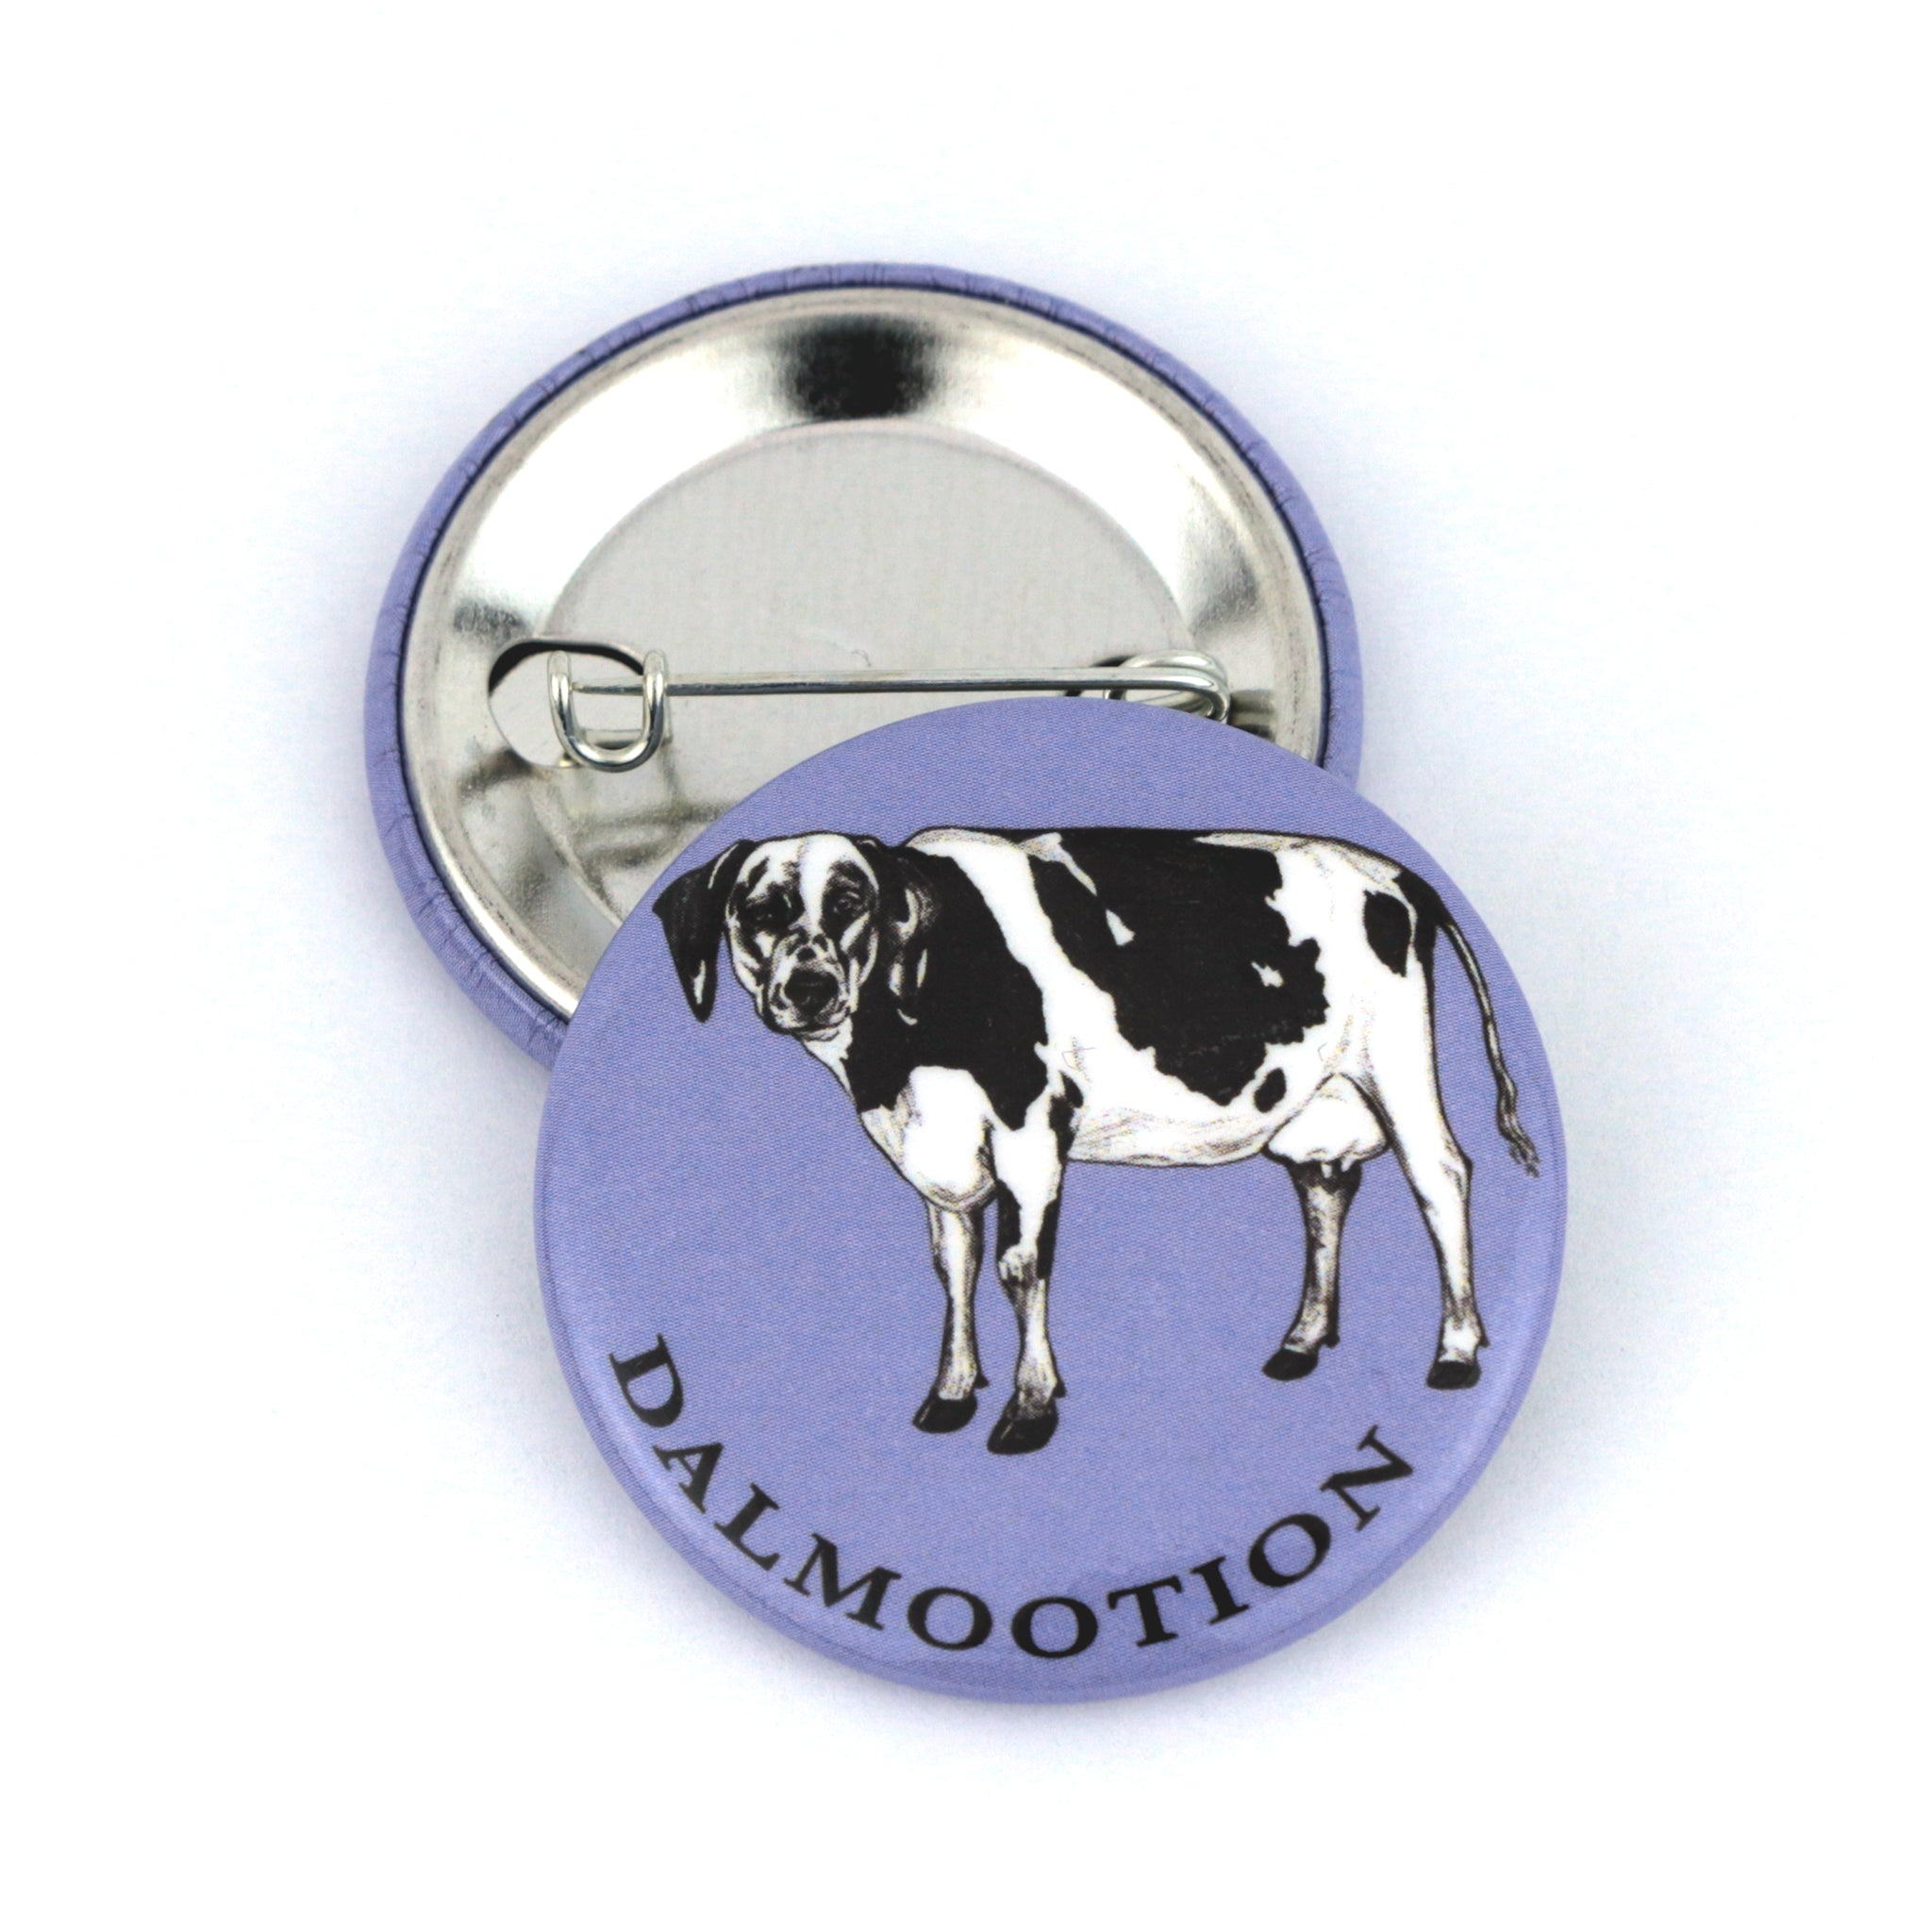 Dalmootion 1.5" Pinback Button